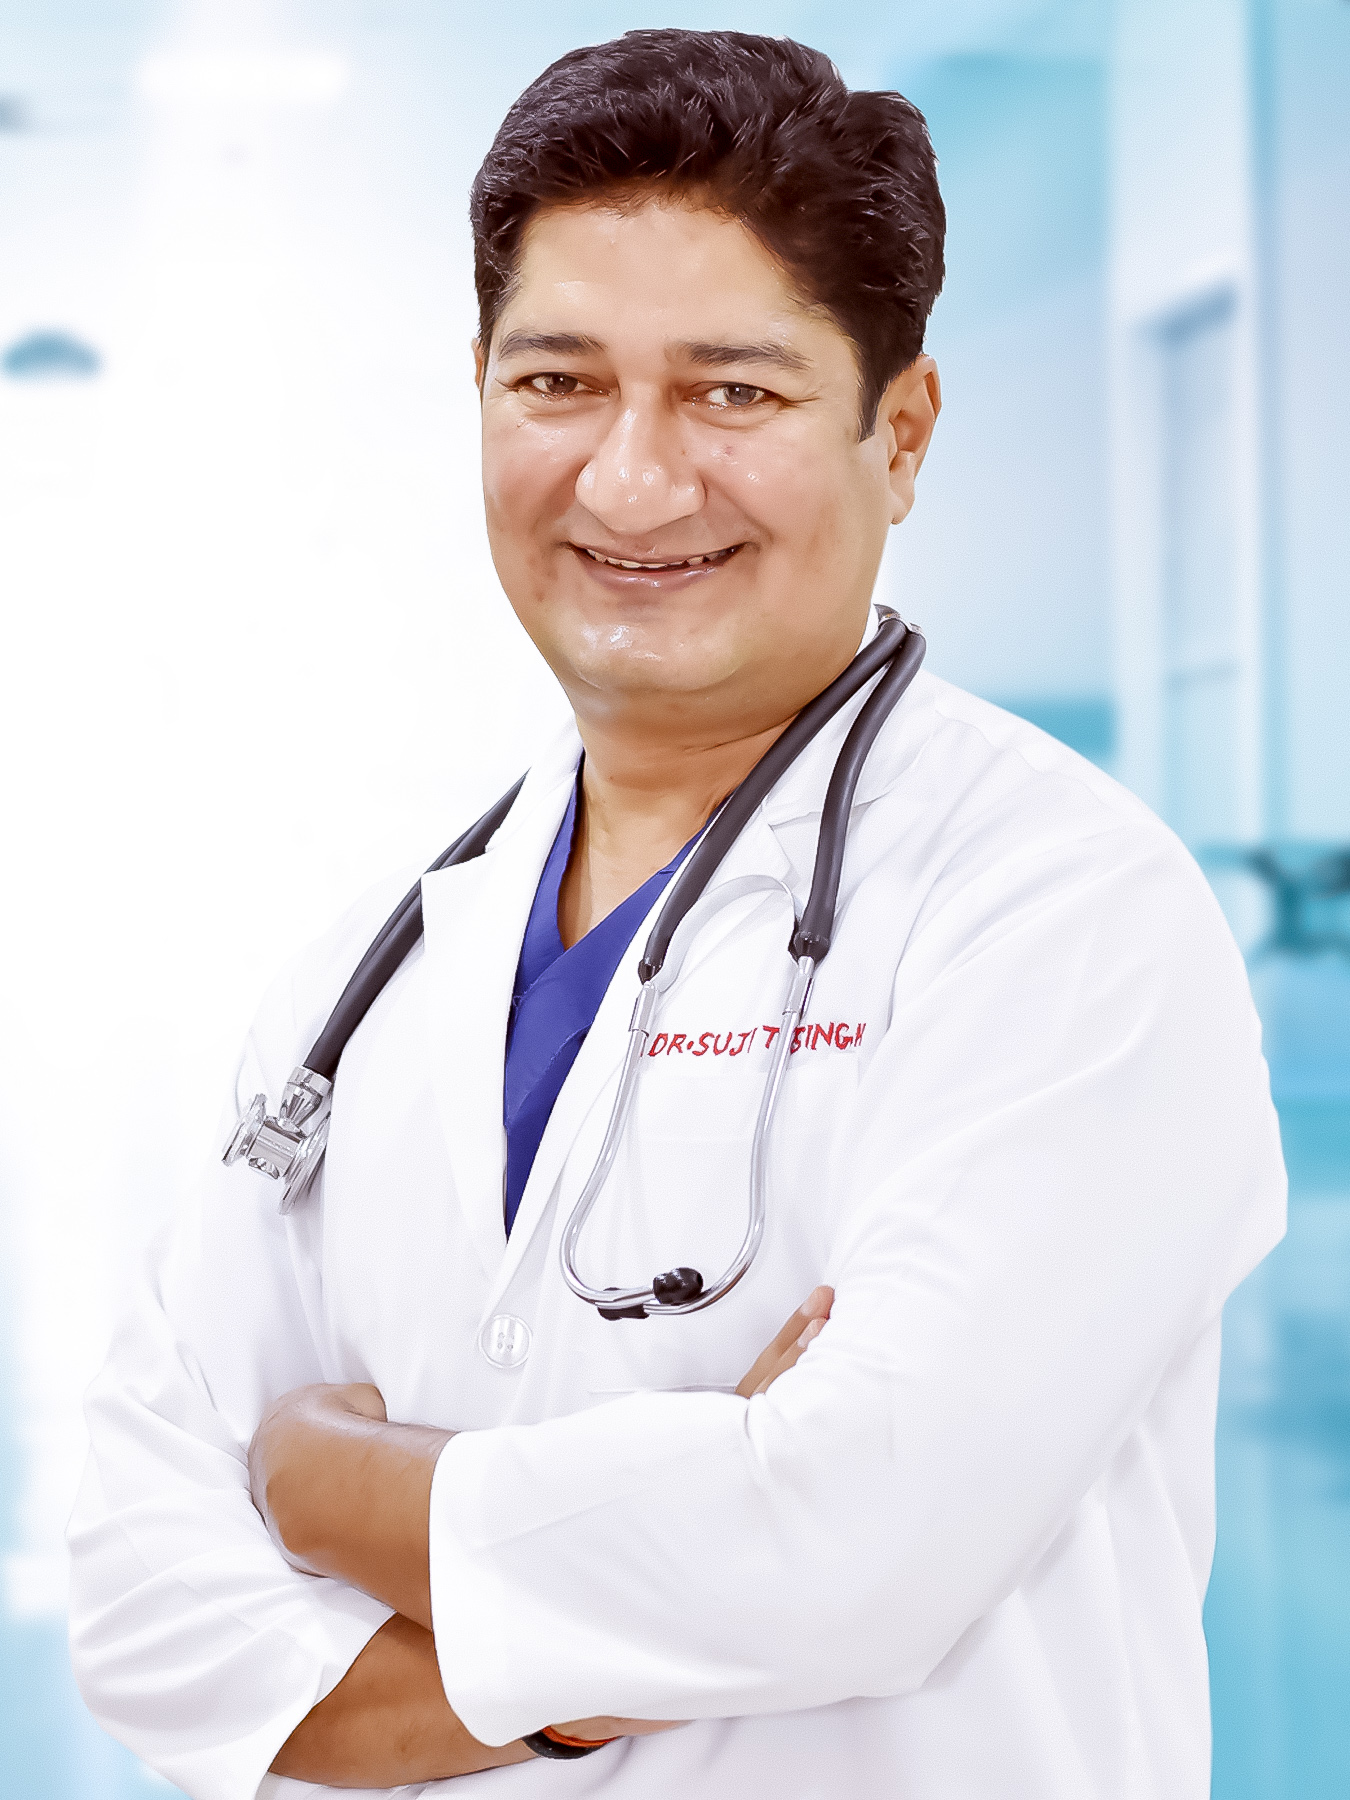 Dr Sujit Singh